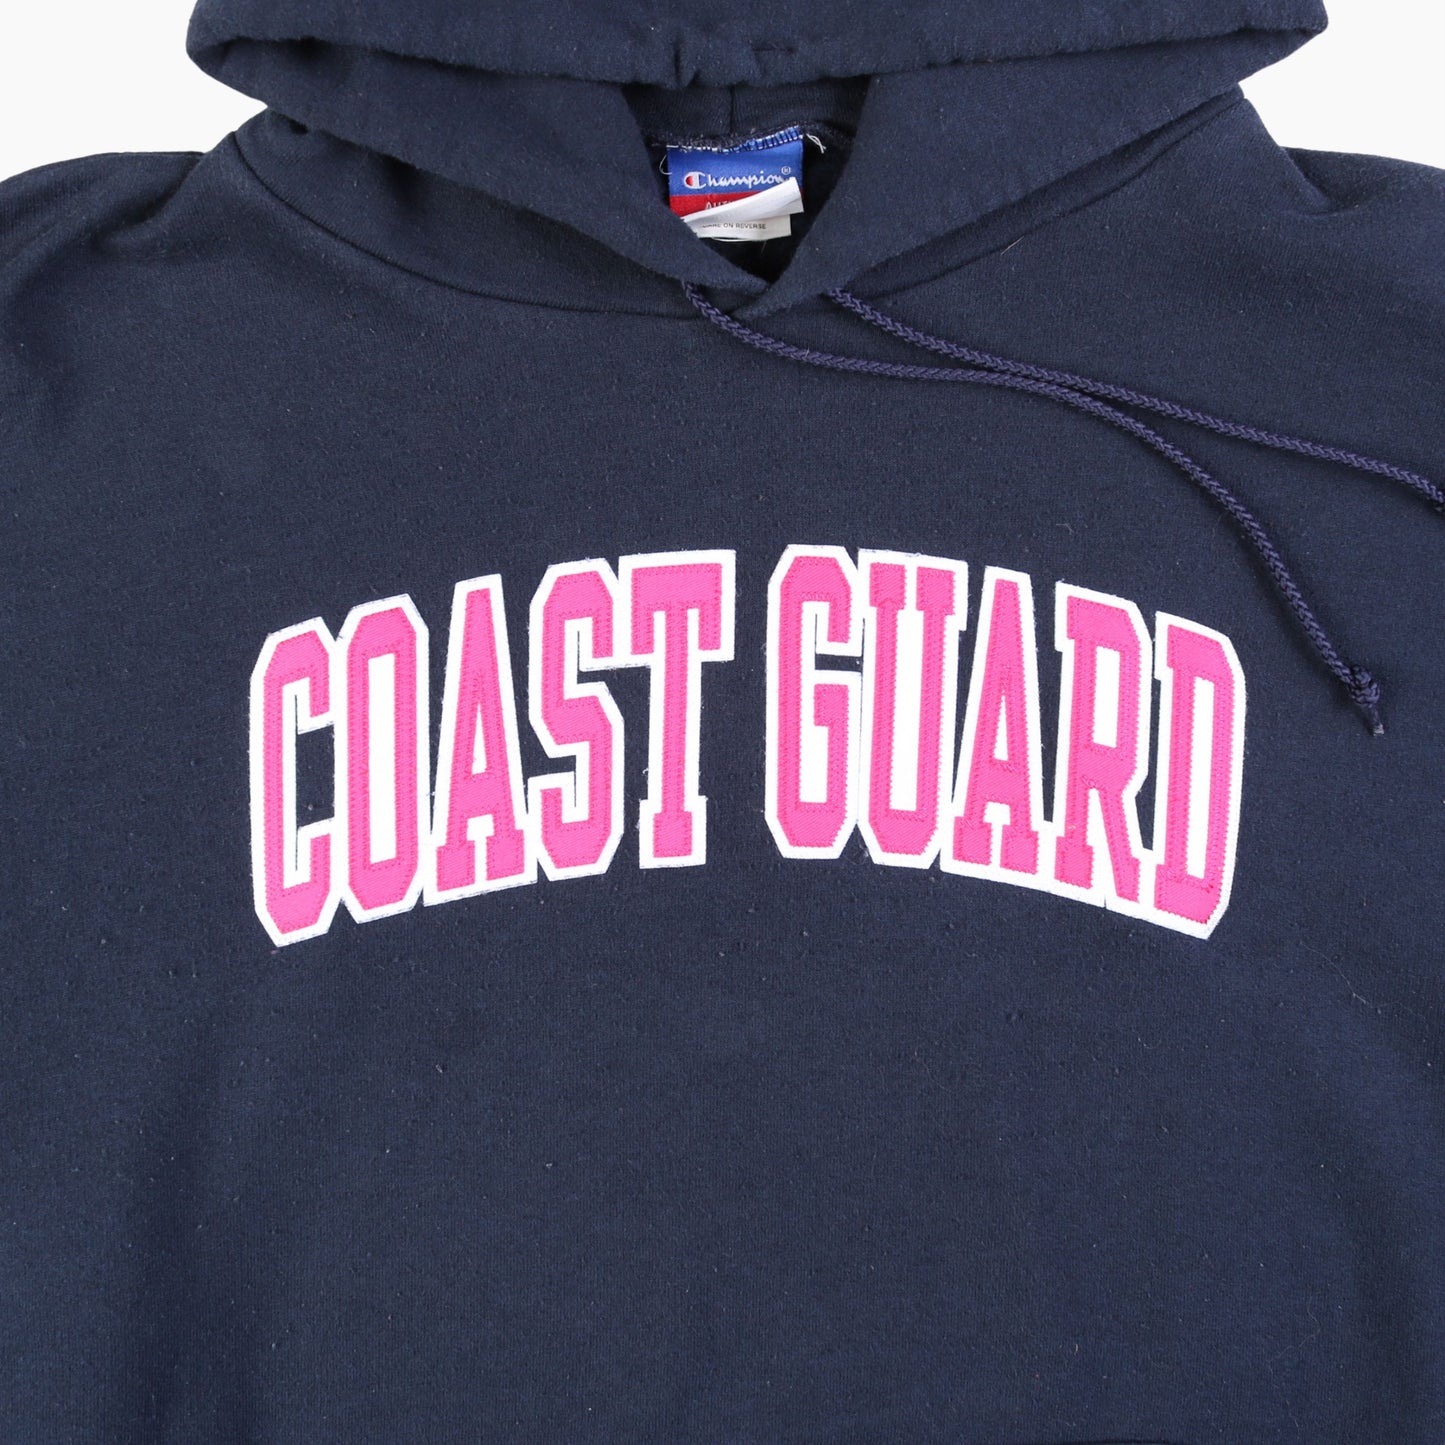 Vintage 'Coast Guard' Champion Hooded Sweatshirt - American Madness